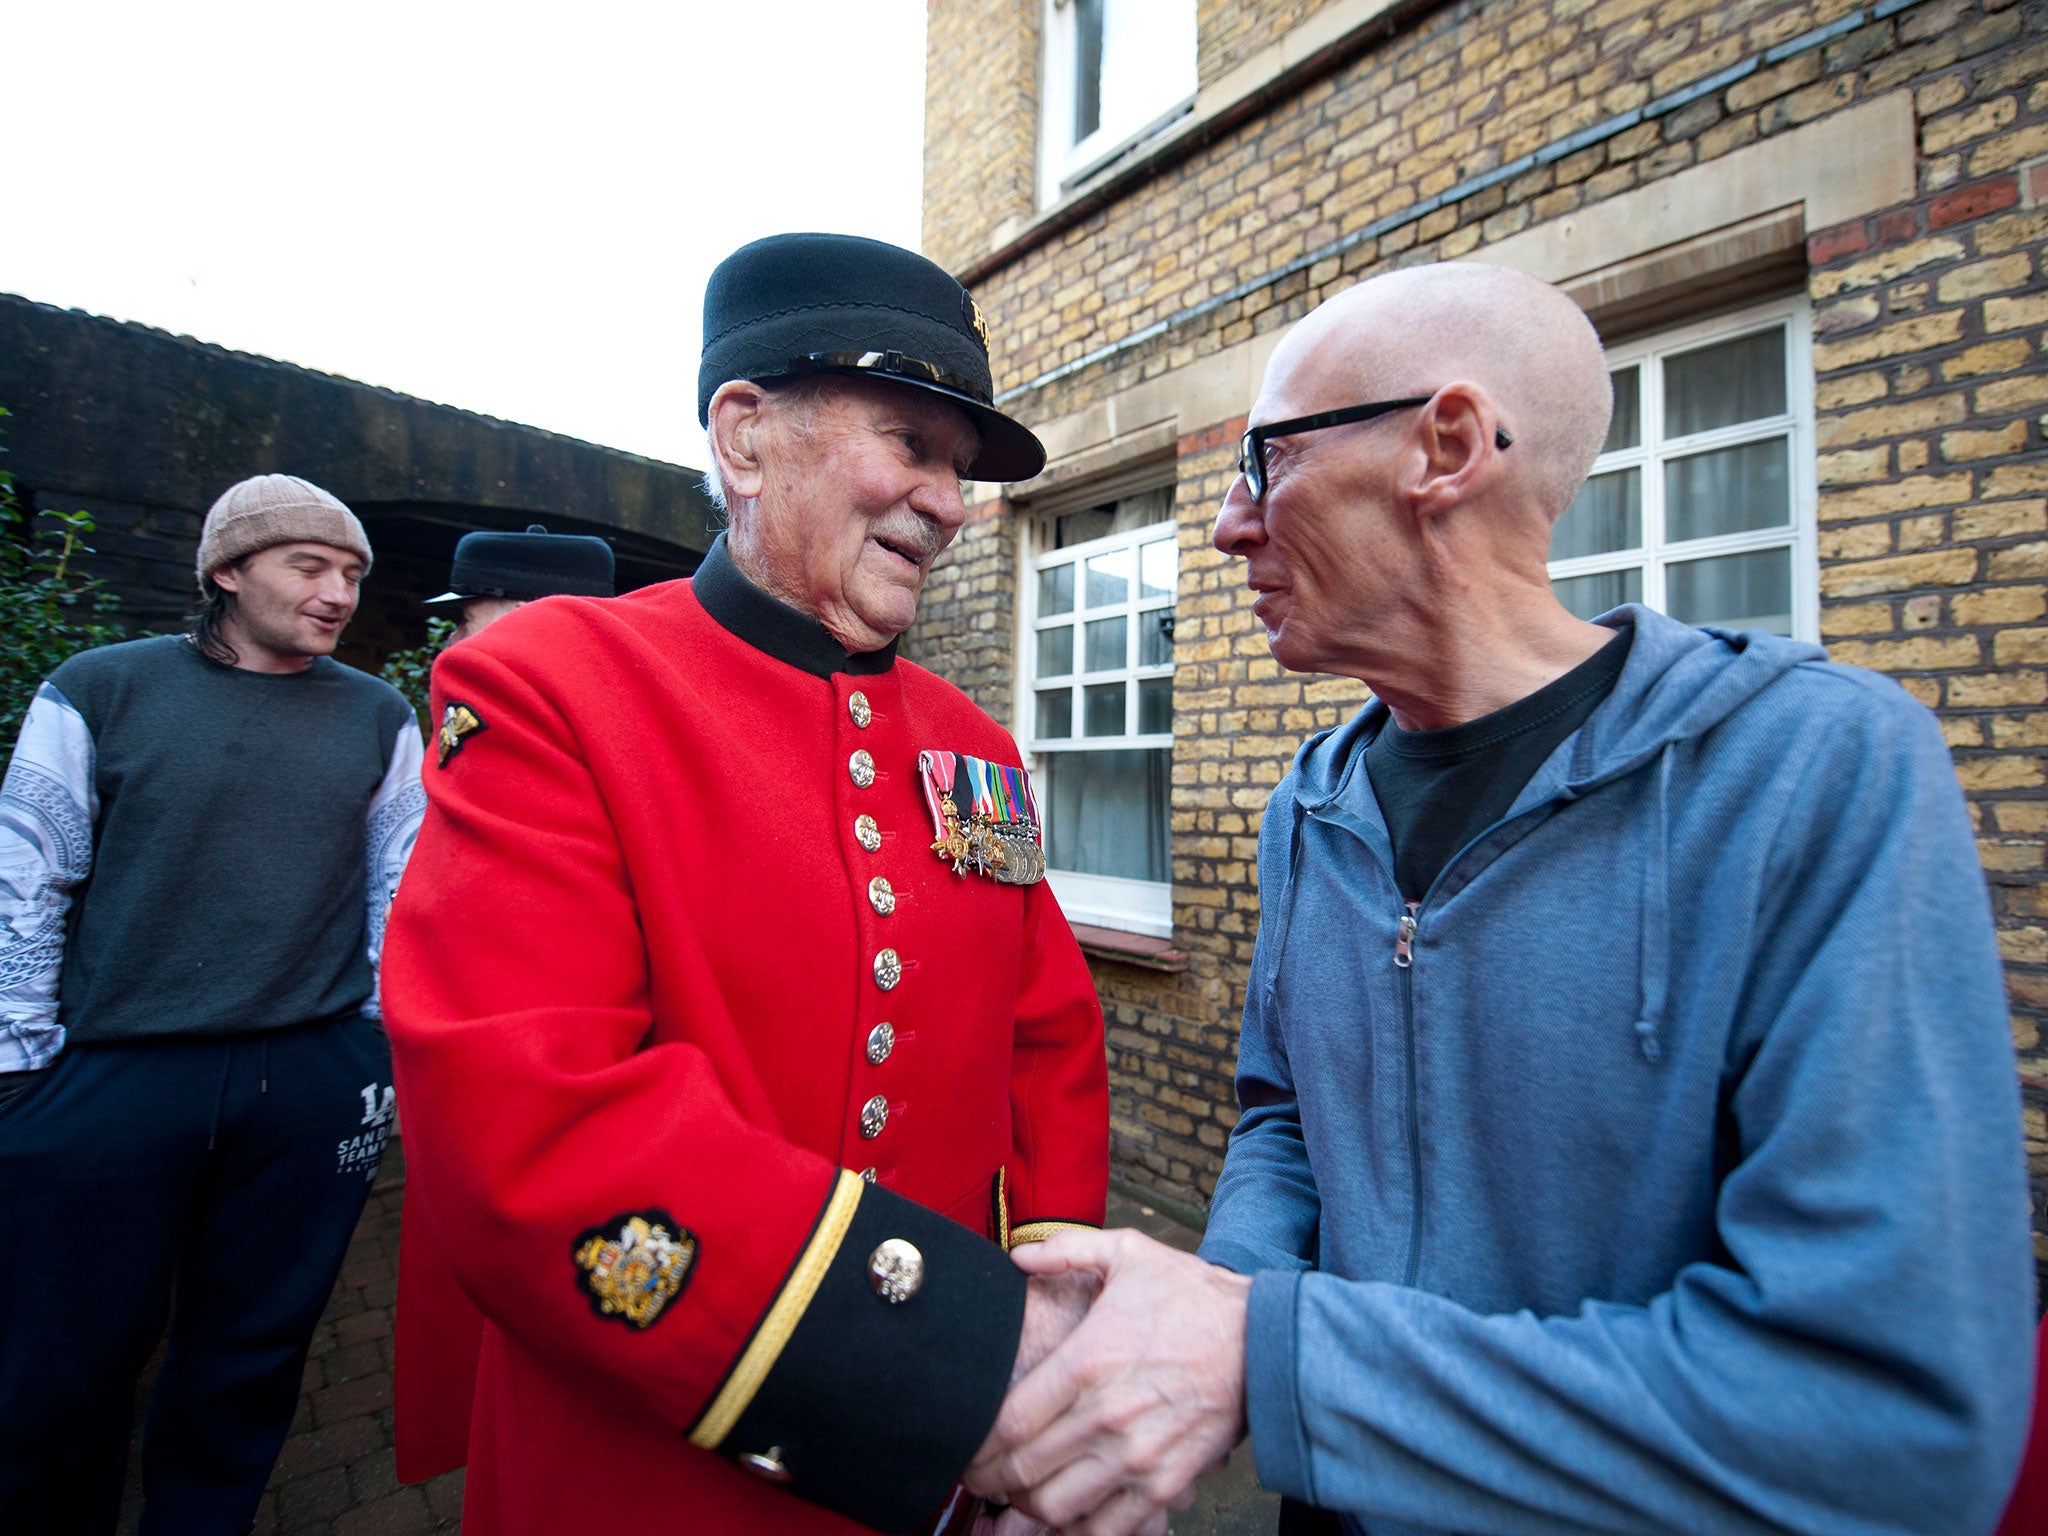 Chelsea Pensioners meet residents of Veterans Aid’s hostel, New Belvedere House, in east London